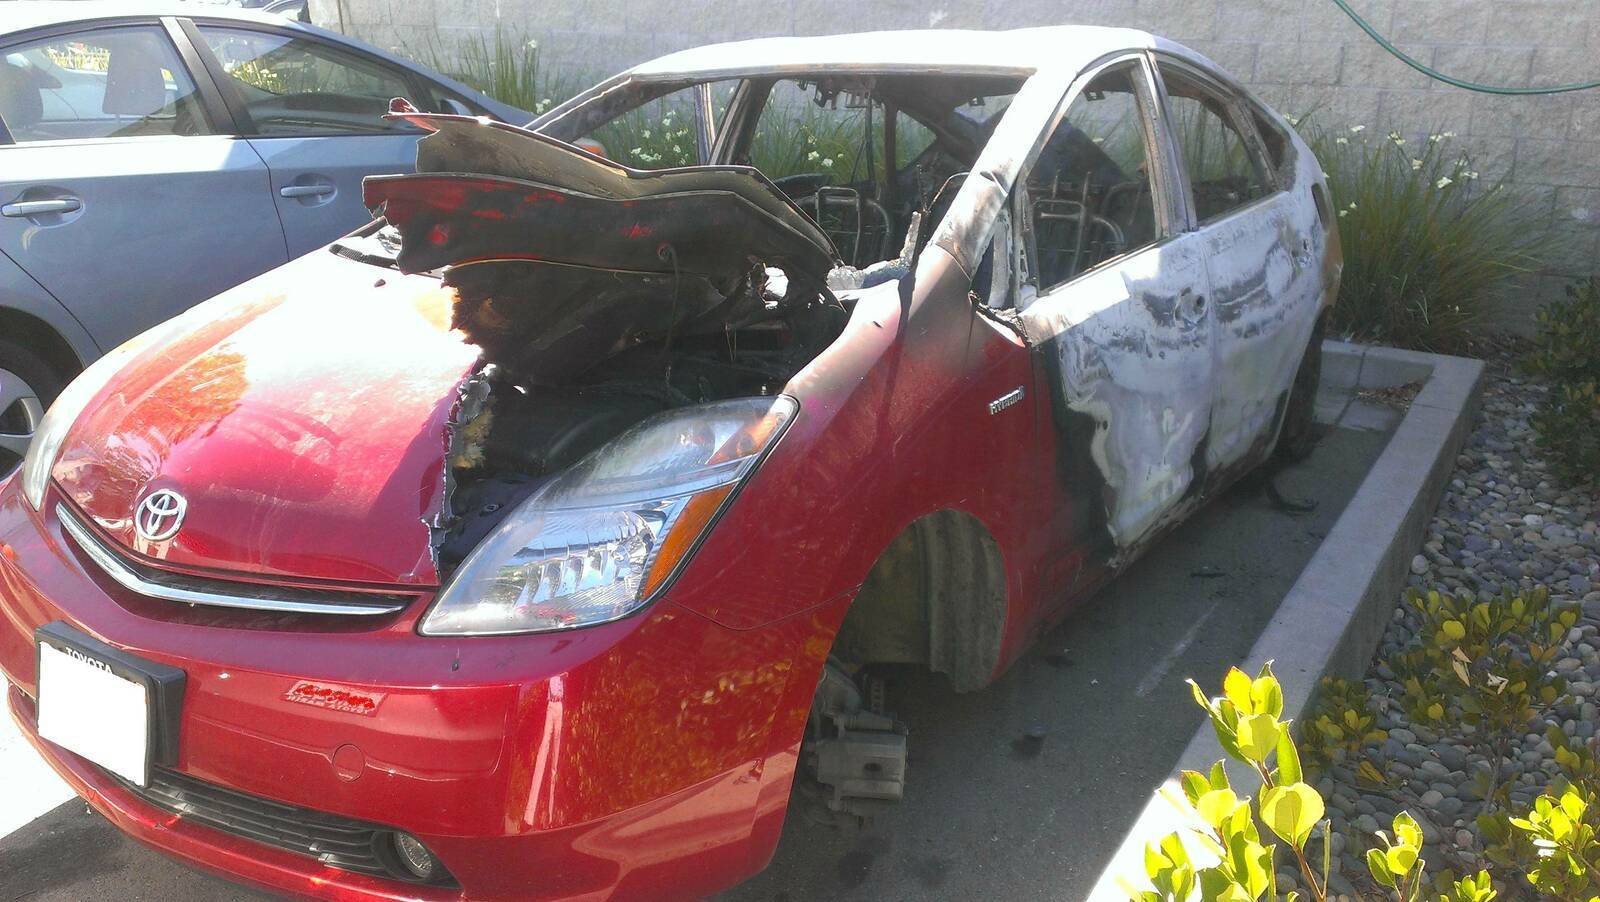 Toyota-Prius-Burn-Fire-Damage-1.jpg